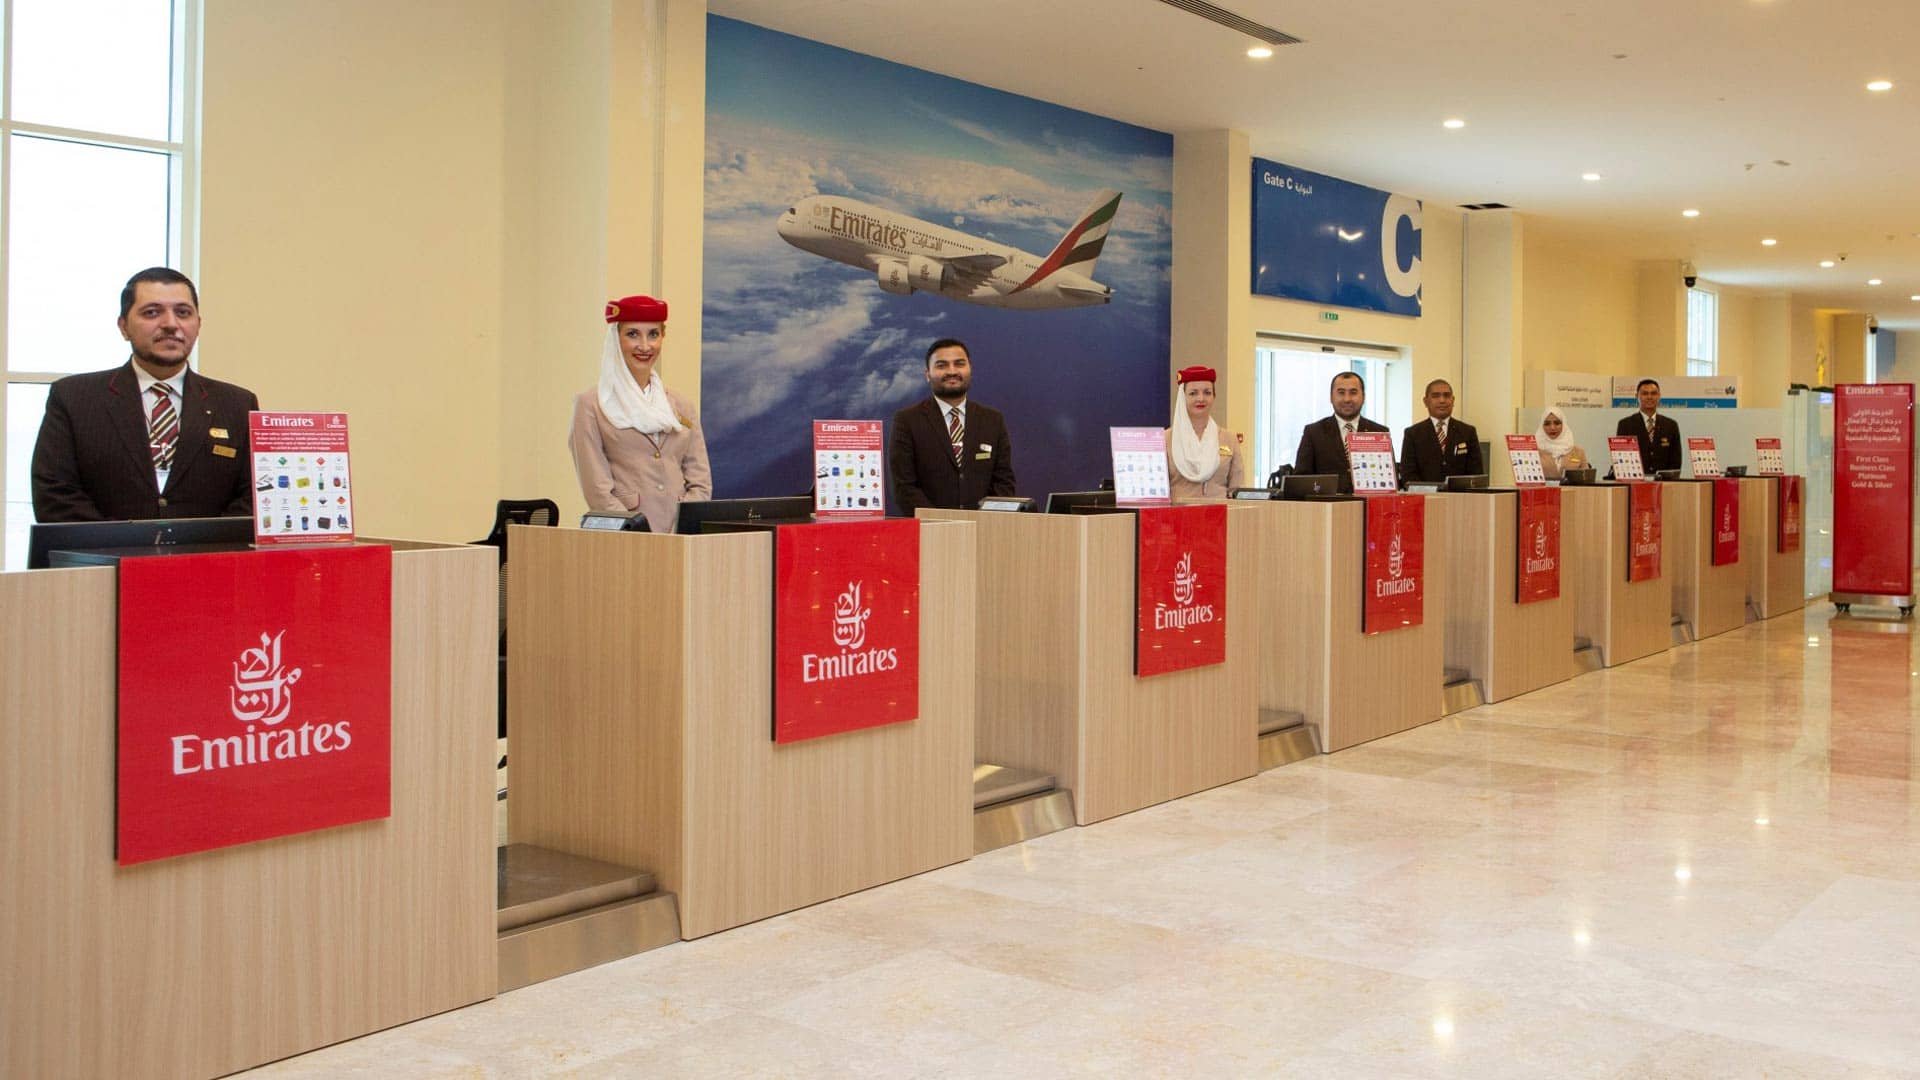 Emirates Cruise Terminal Check-in